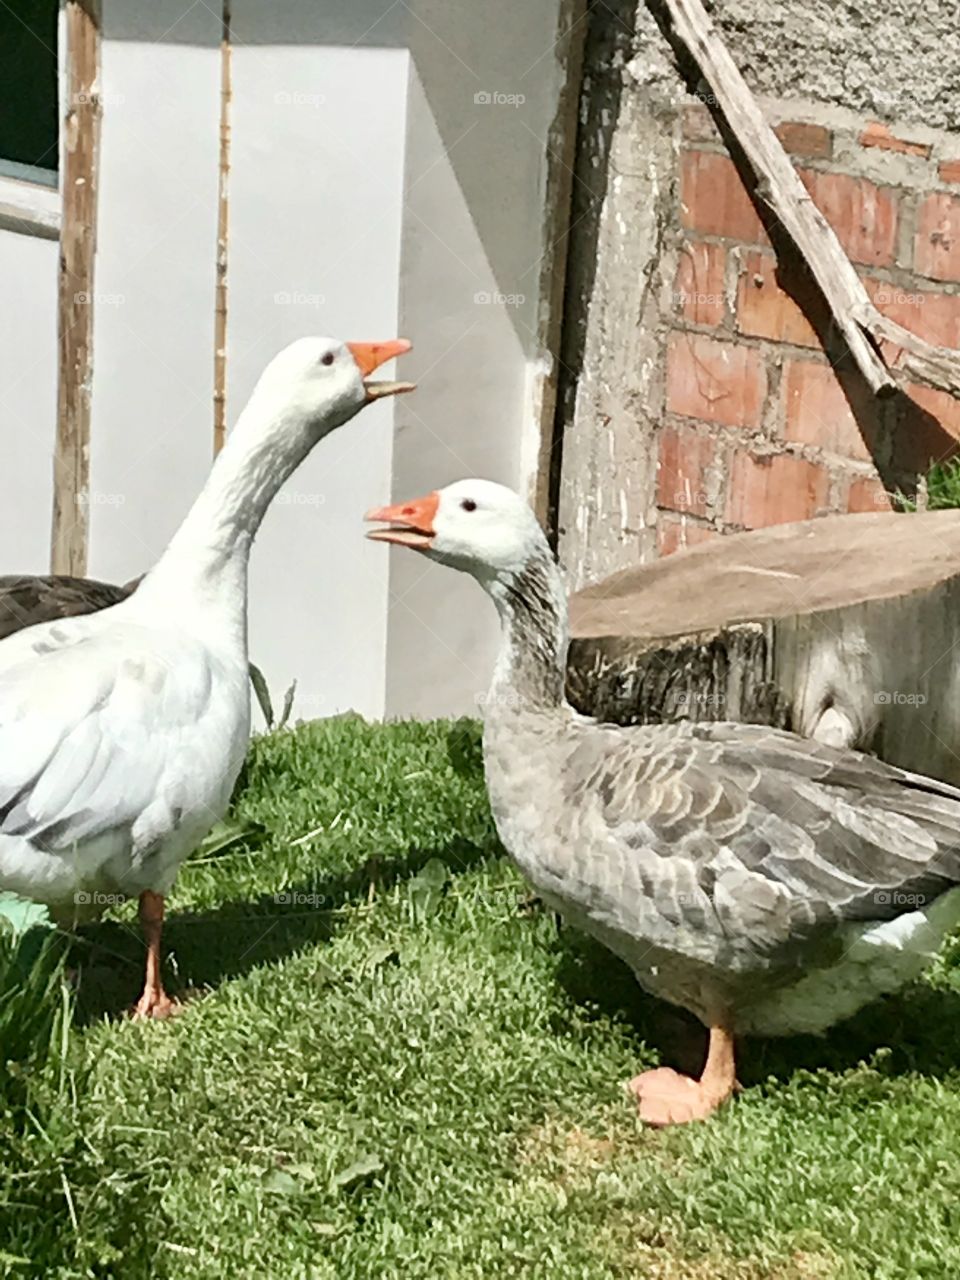 Talkative ducks enjoying a summer day in an animal sanctuary outside of Cusco, Peru 